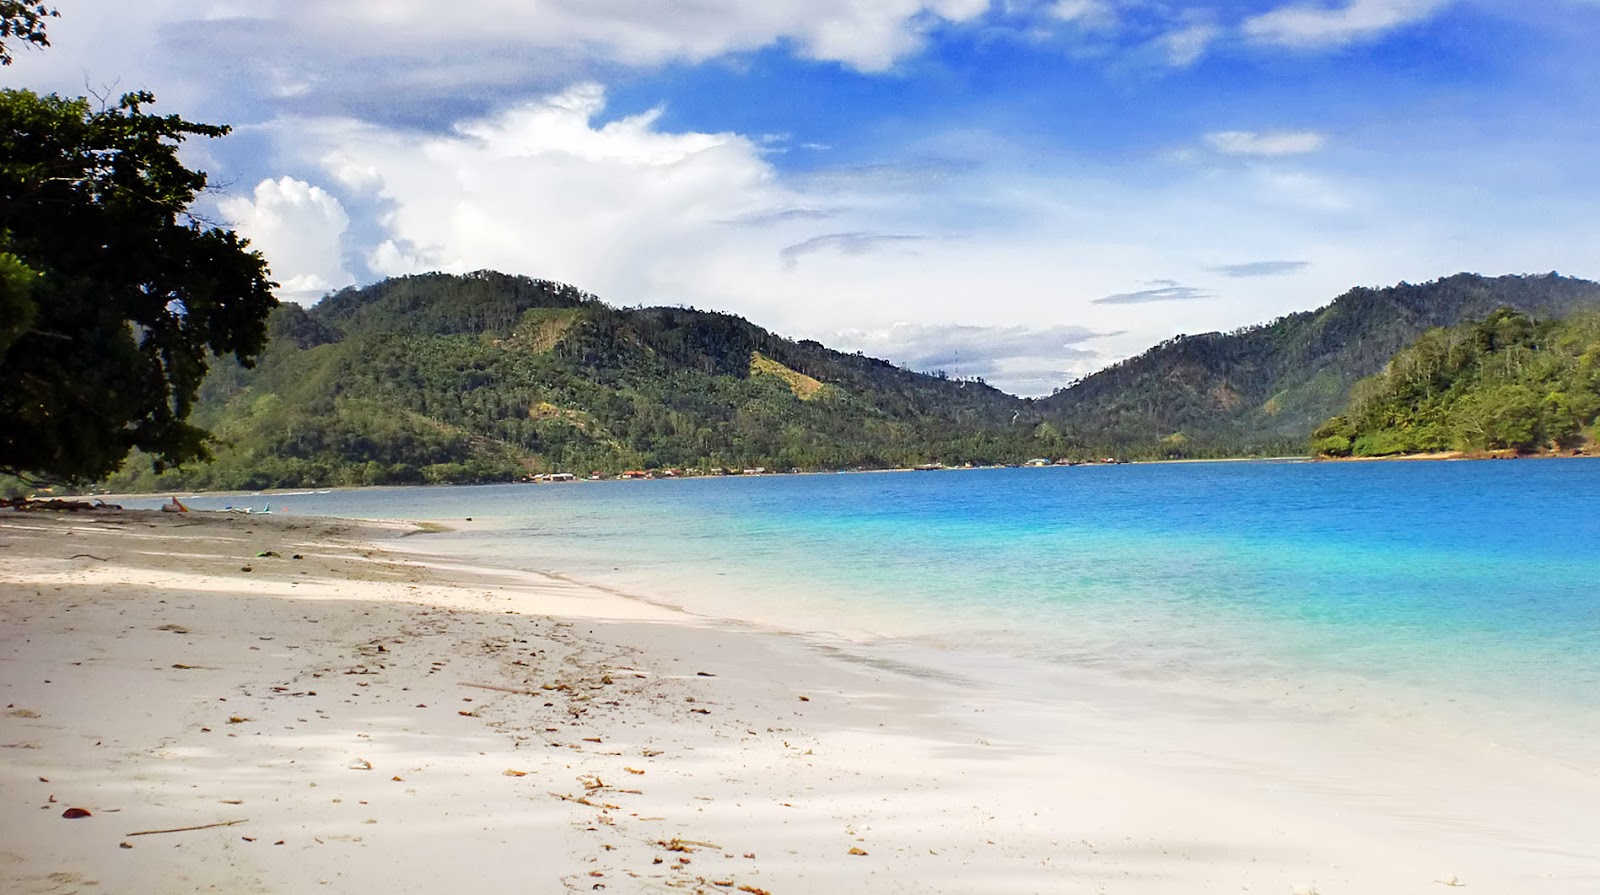 patawana beach has a stretch of white sand beach with clear blue sea water